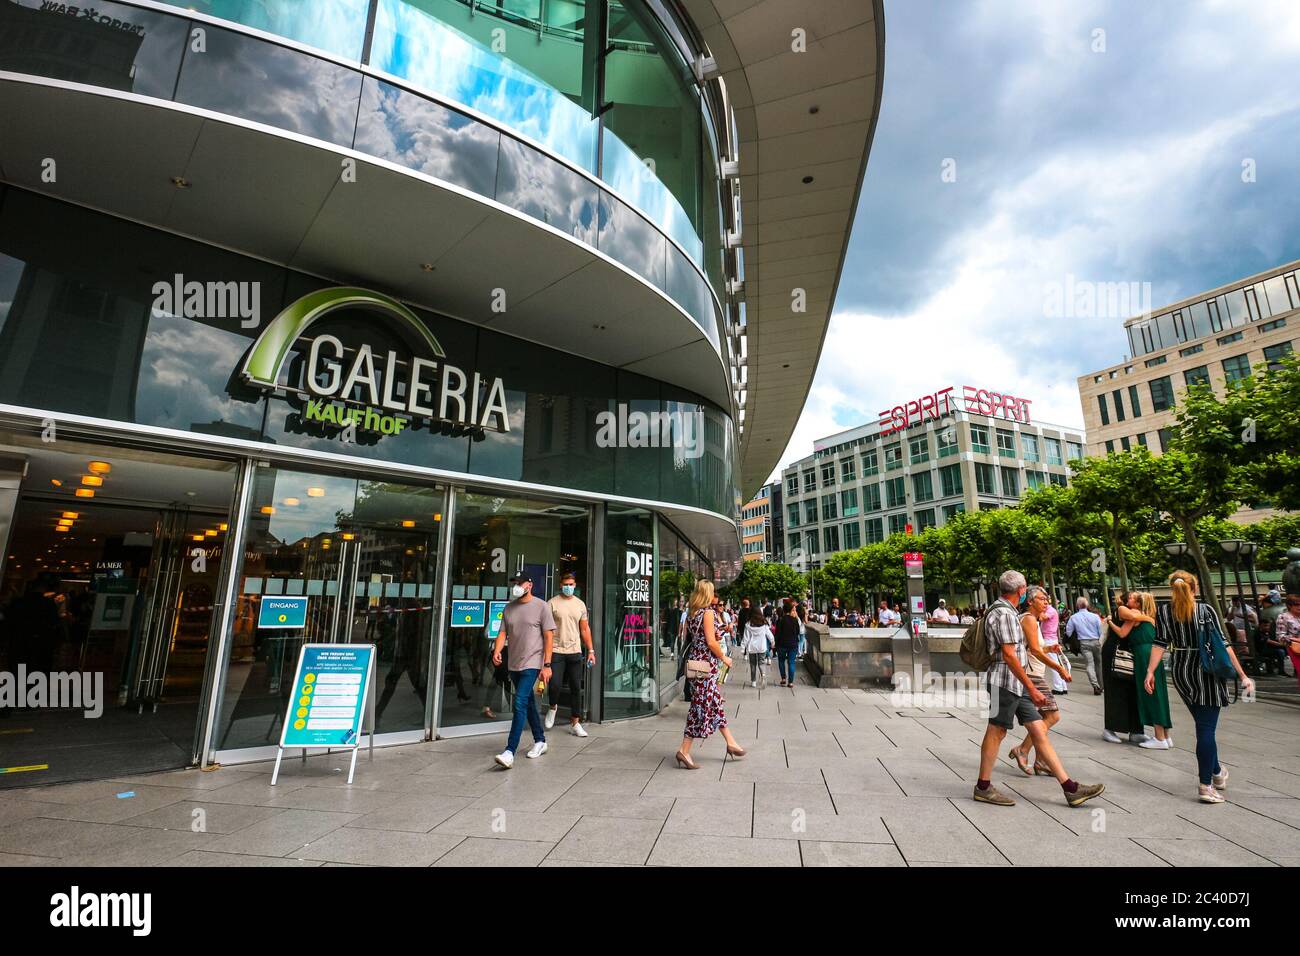 Galeria Kaufhof department store in Frankfurt am Main, Germany, on Hauptwache square, Zeil shopping street. Stock Photo